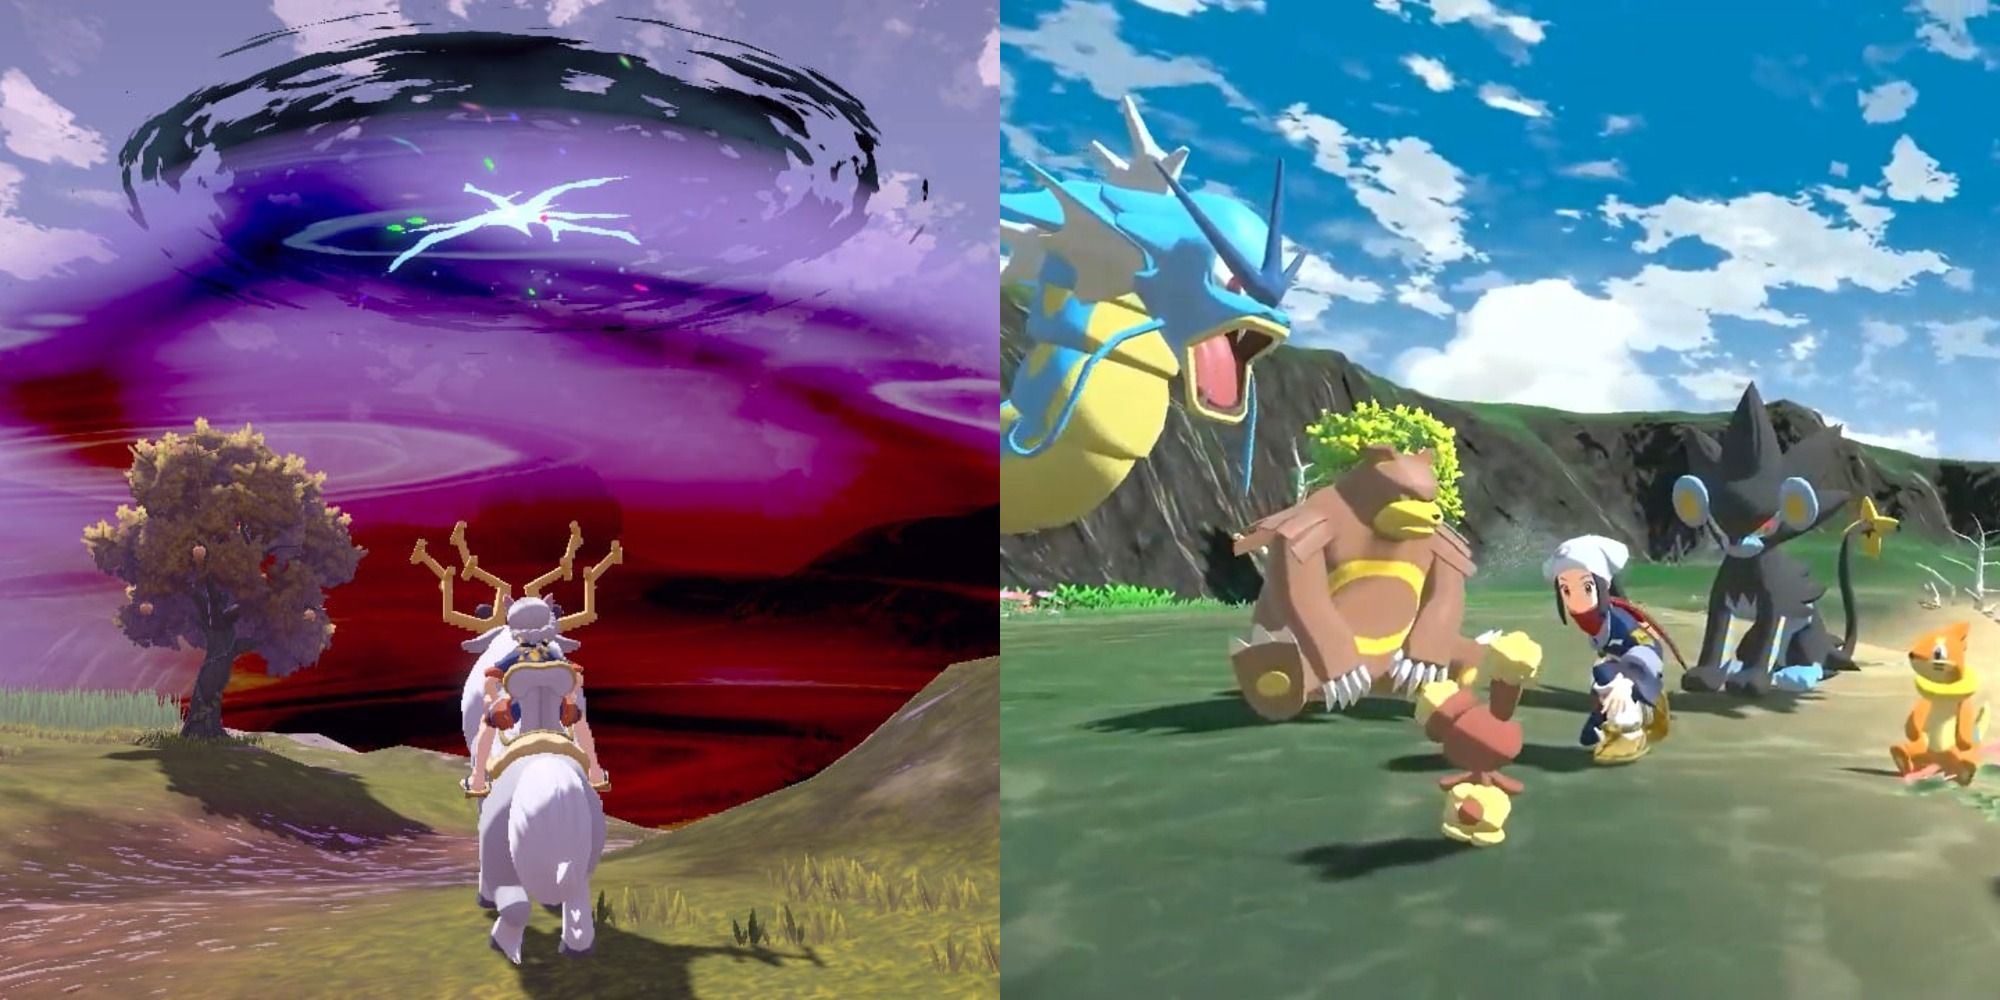 Split image showing a space-time distortion and a Pókémon team in Pokémon Legends Arceus